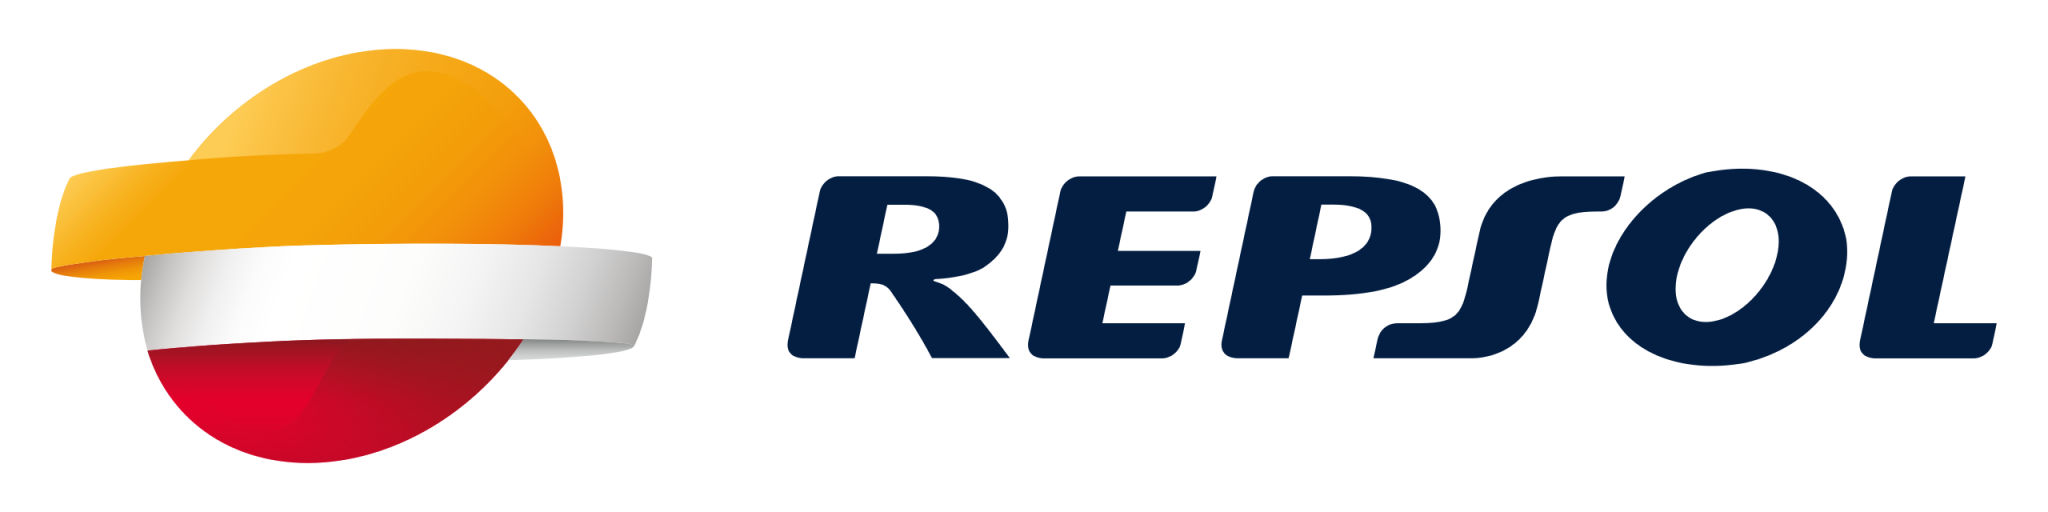 Repsol Logo.svg